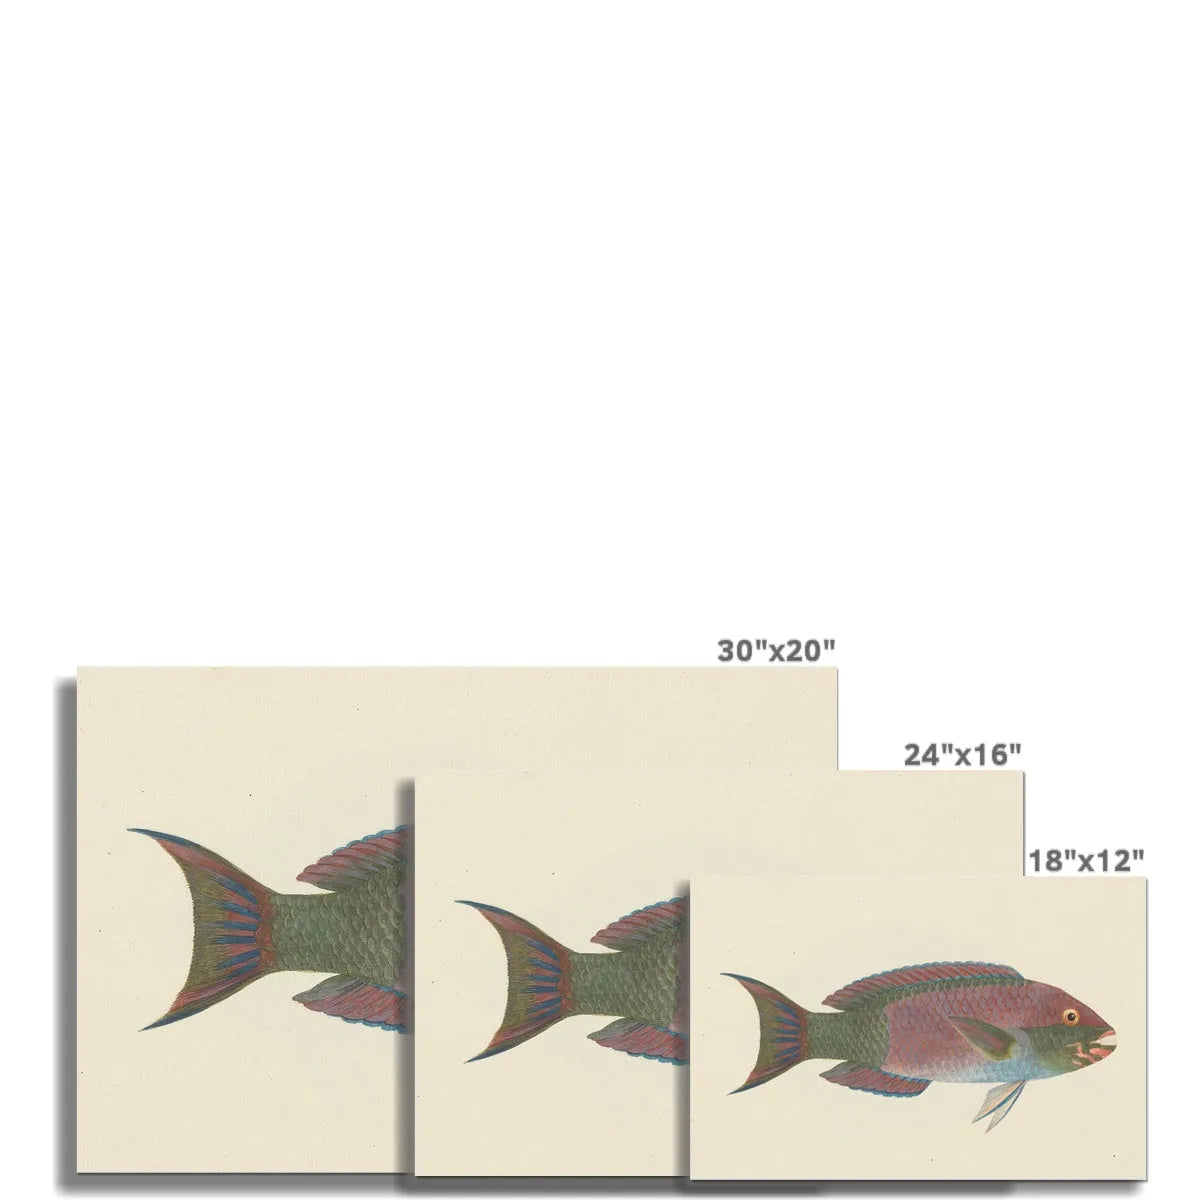 The Fish By Luigi Balugani Fine Art Print - Posters Prints & Visual Artwork - Aesthetic Art